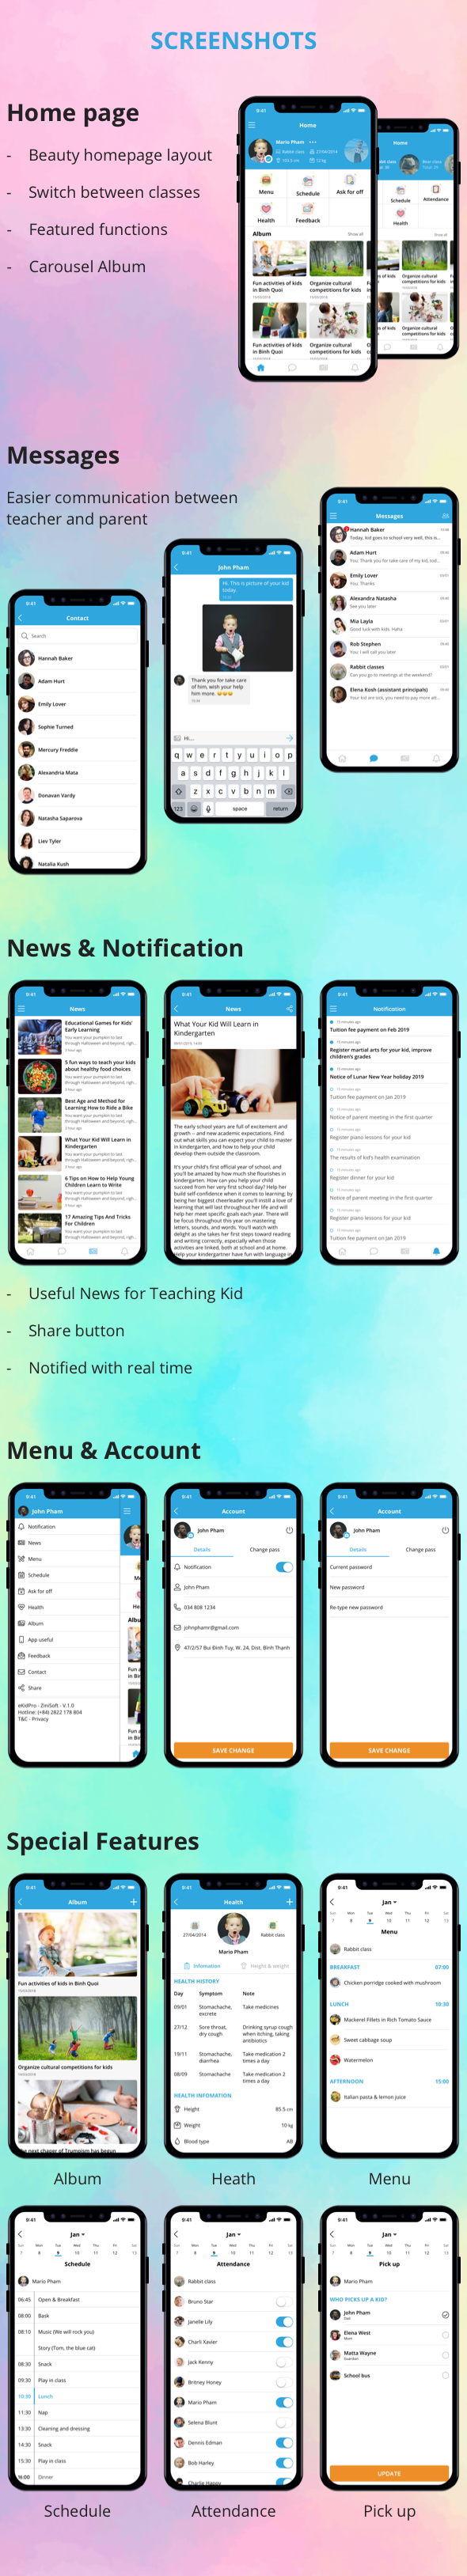 Kindie App - Multi branch kindergarten management mobile app - 3